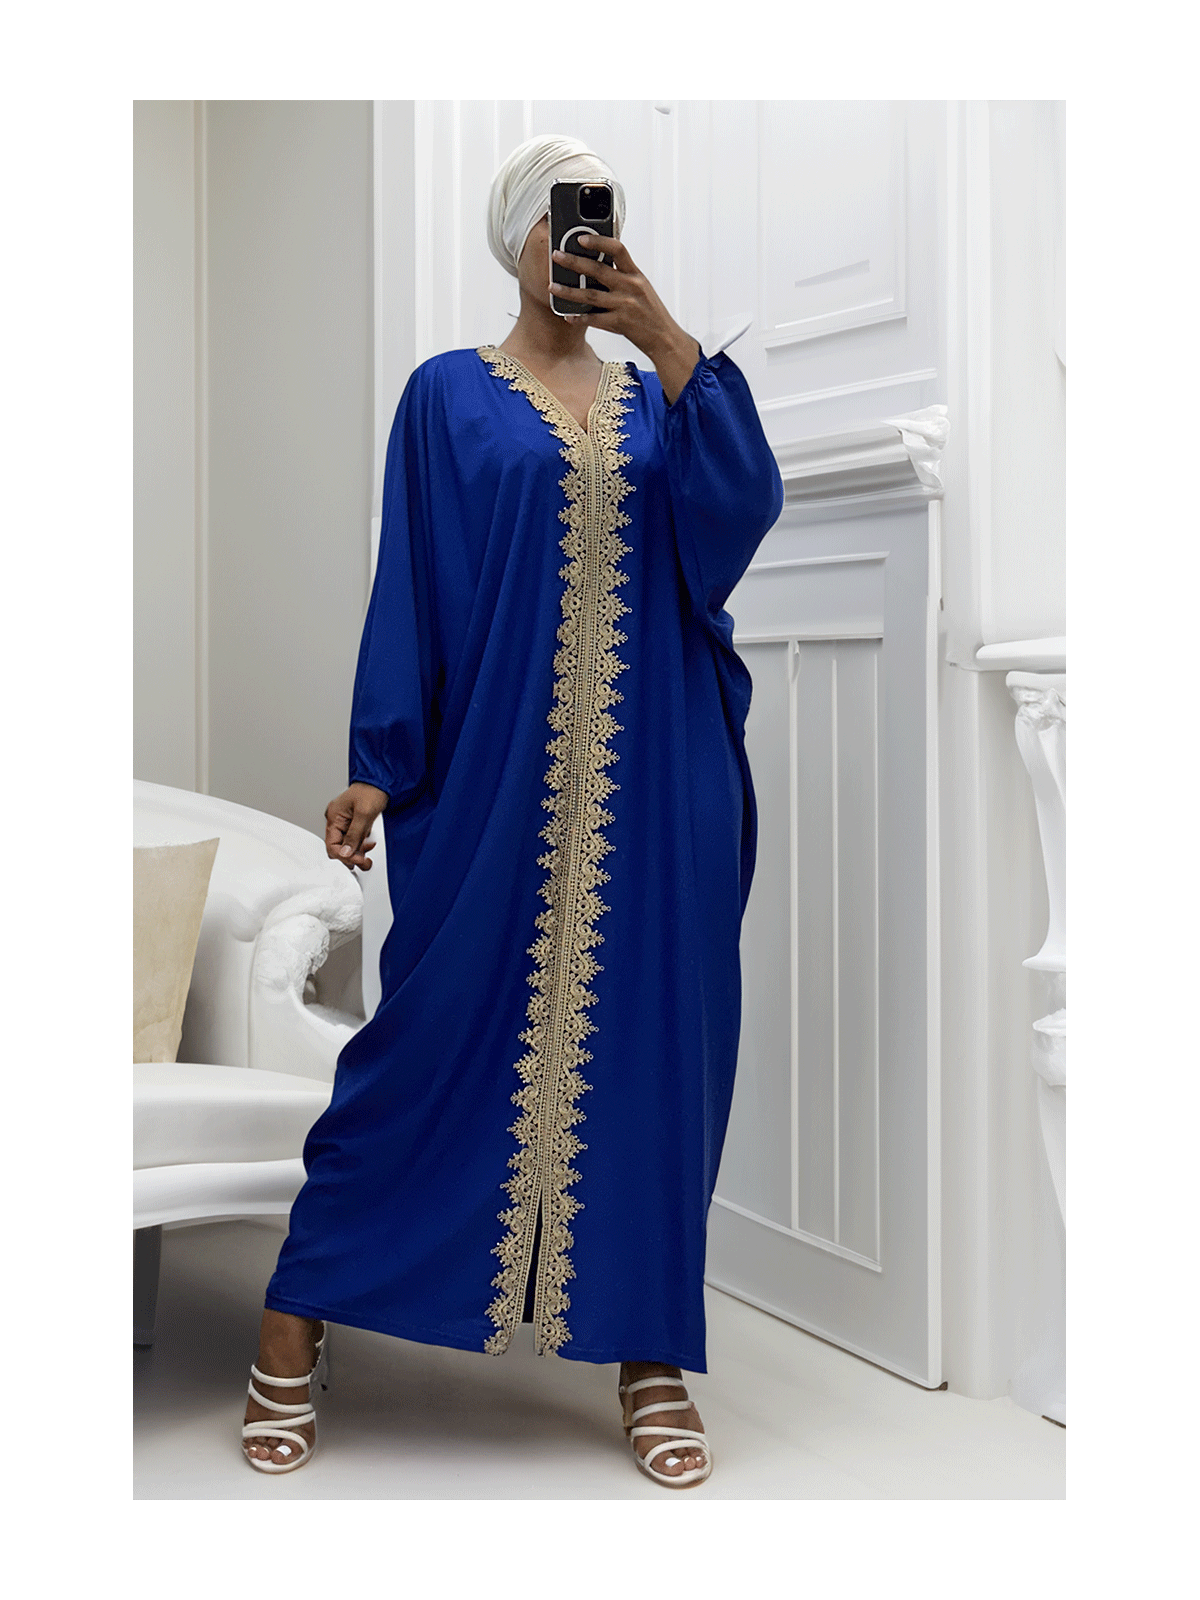 Longue abaya royal over size avec une jolie dentelle - 4